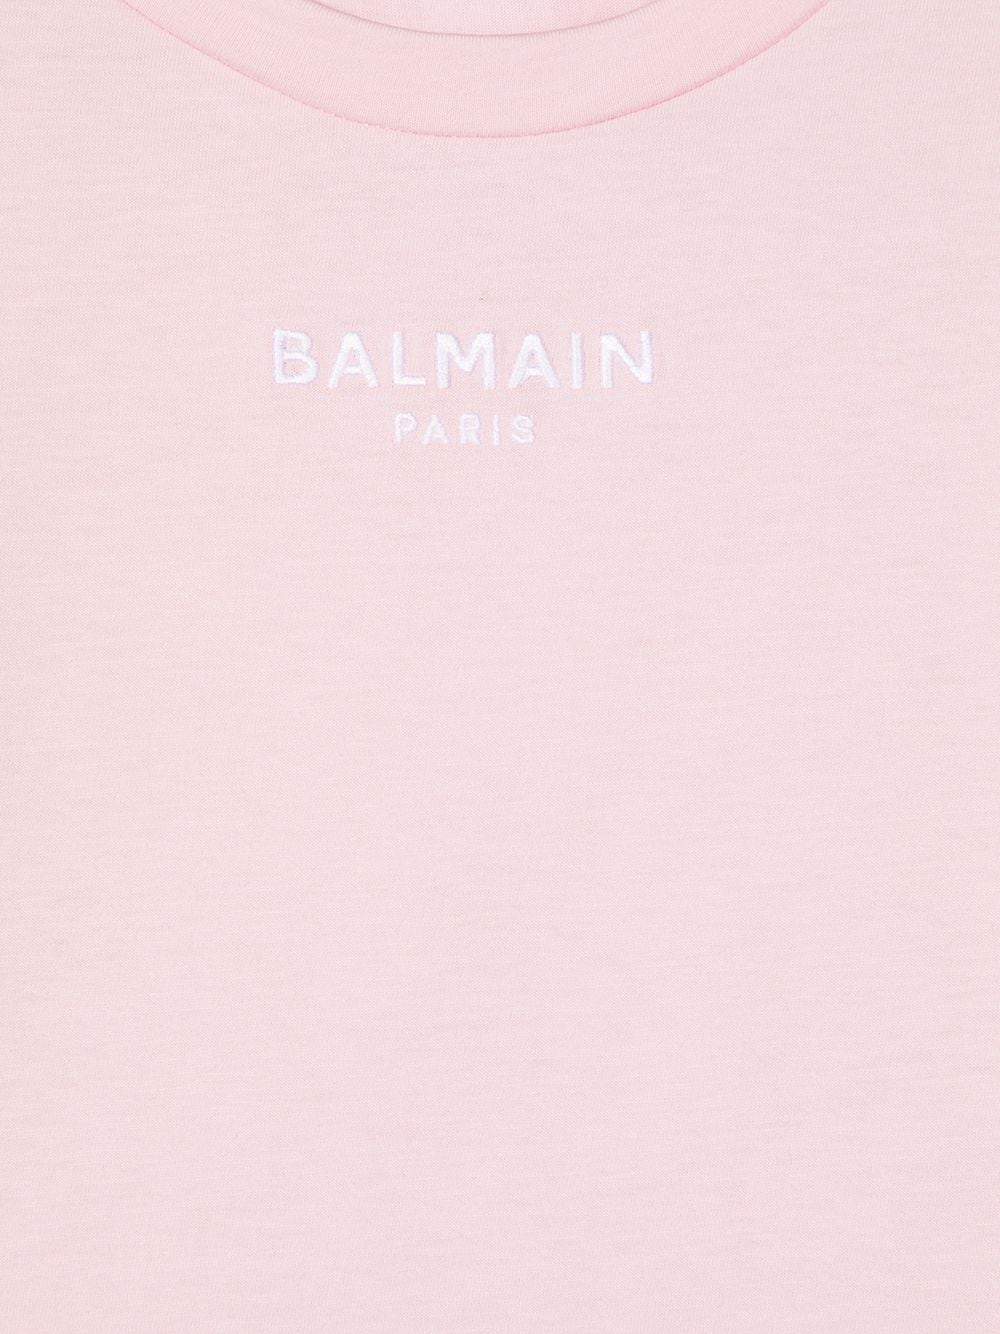 BALMAIN KIDS Logo embroidered t-shirt Pink - MAISONDEFASHION.COM